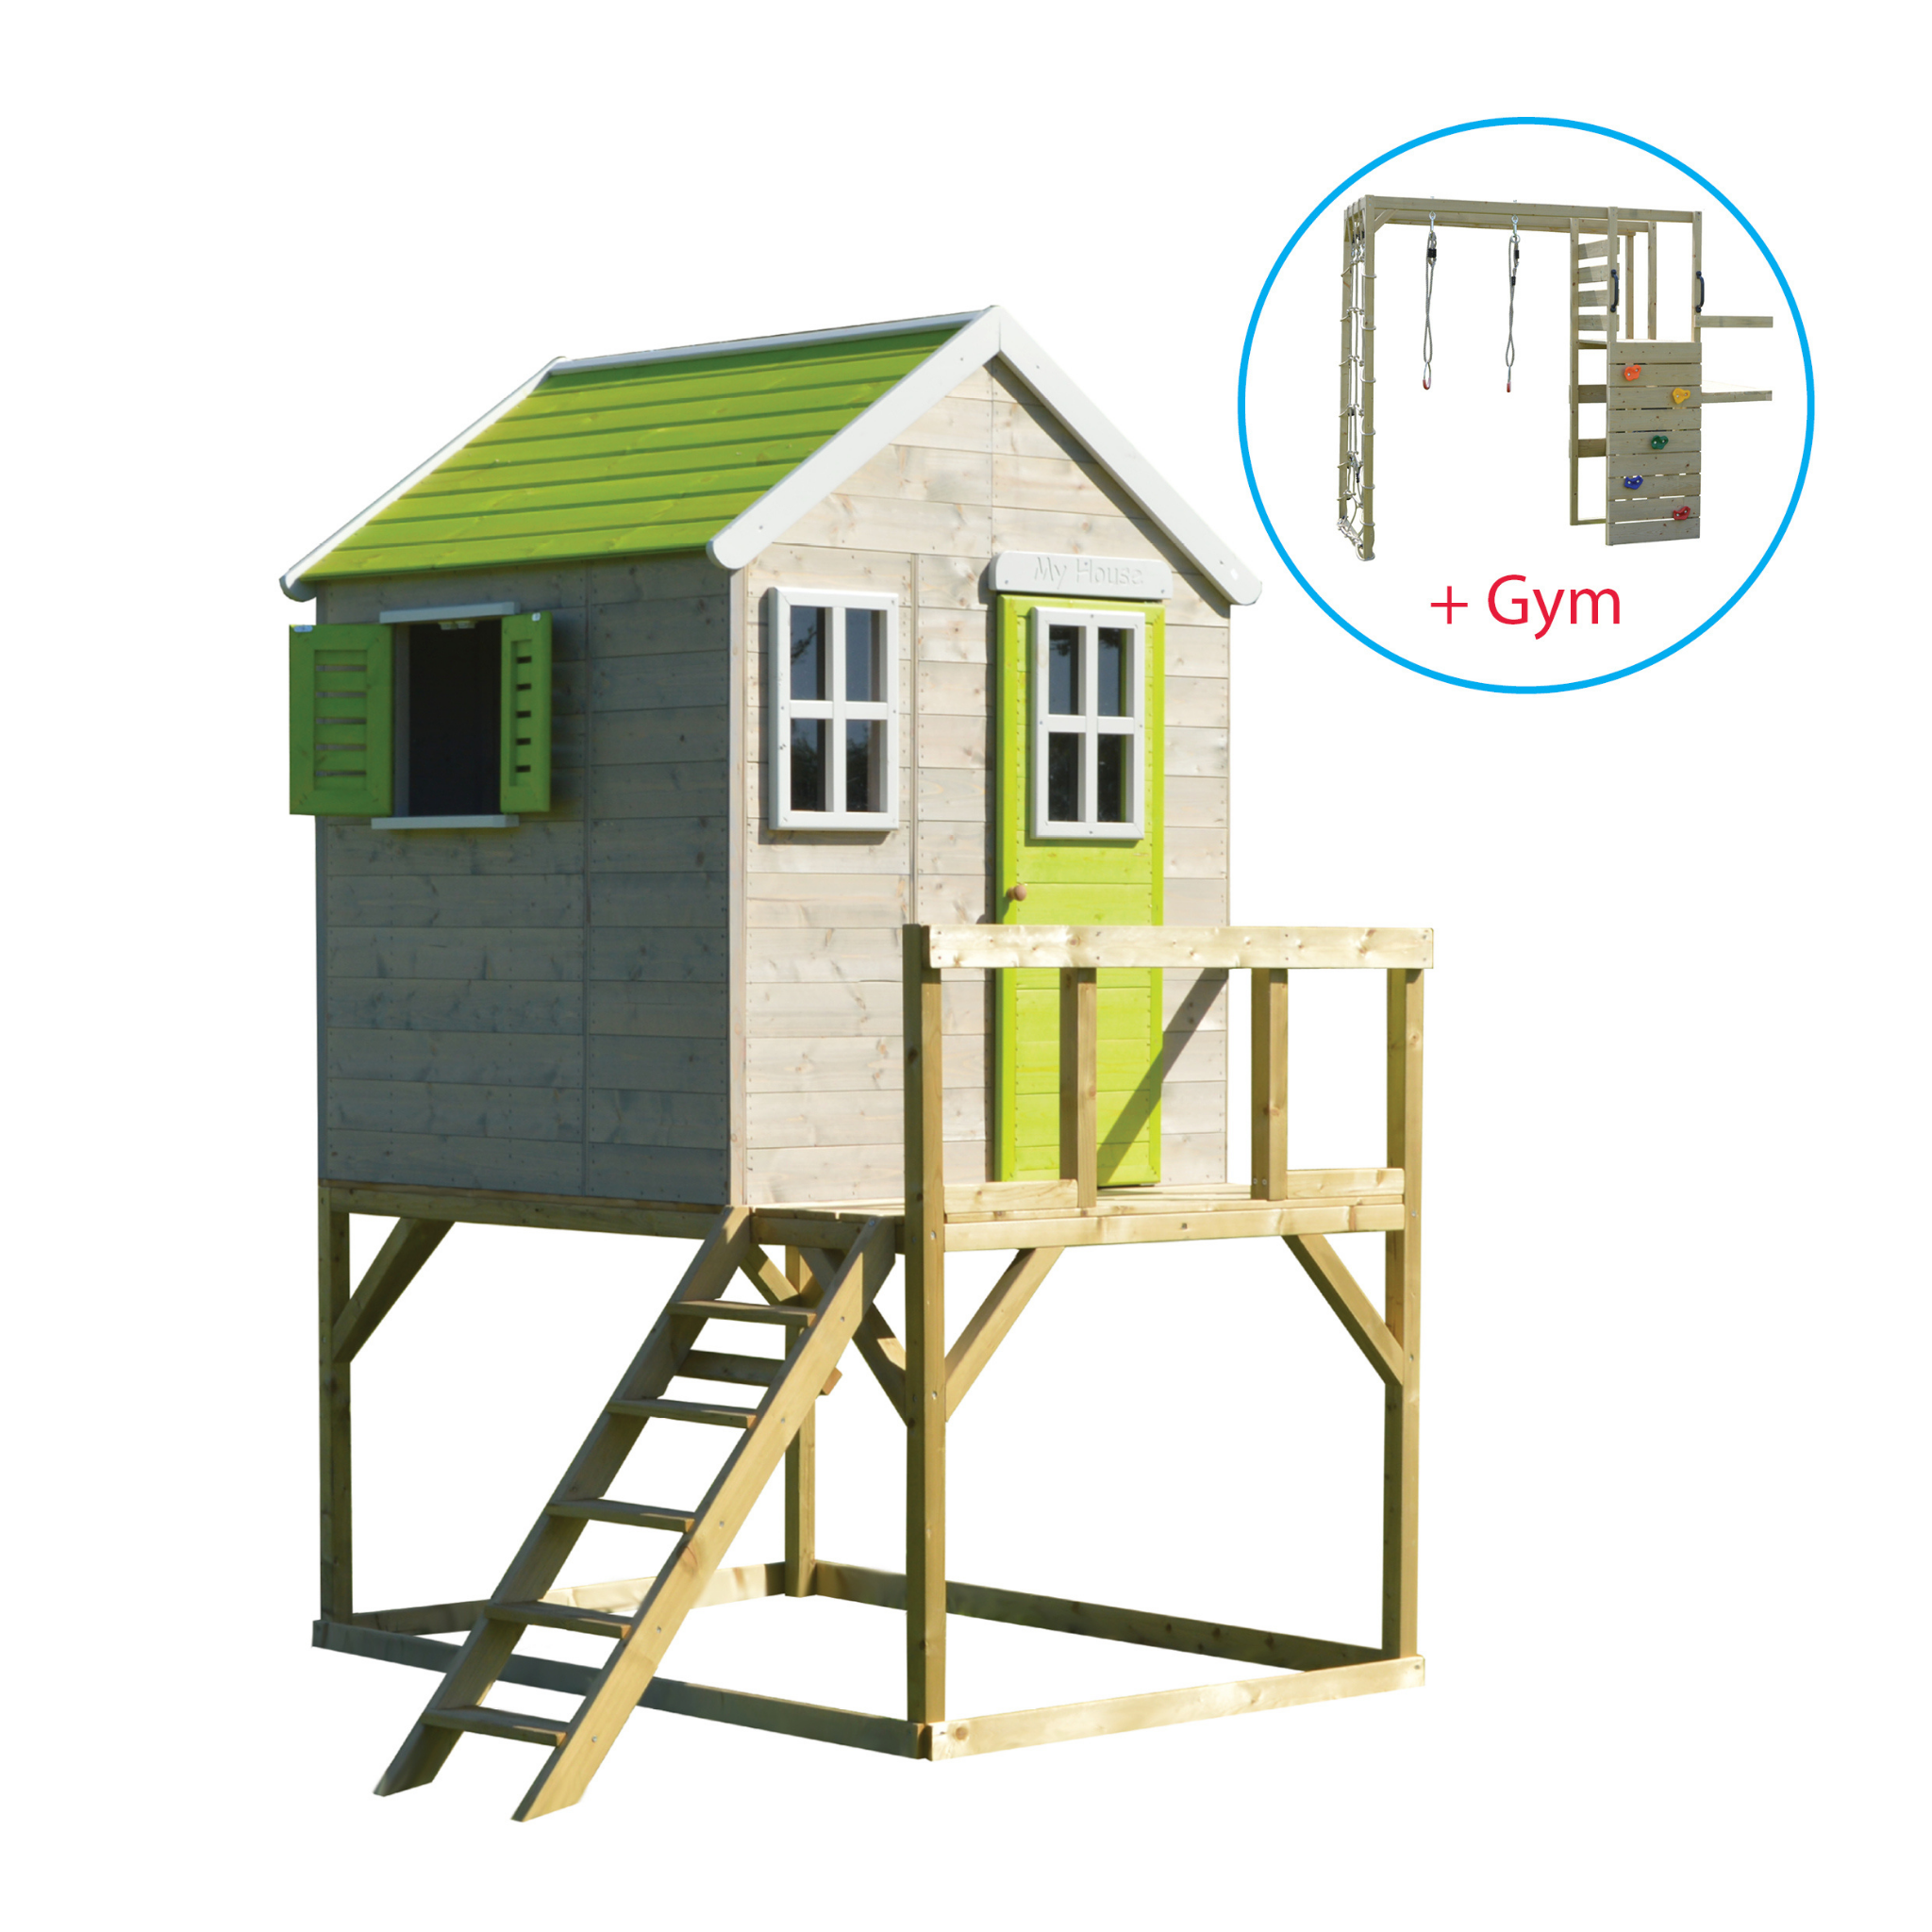 M21-G My Lodge with Platform + Gym Attachment